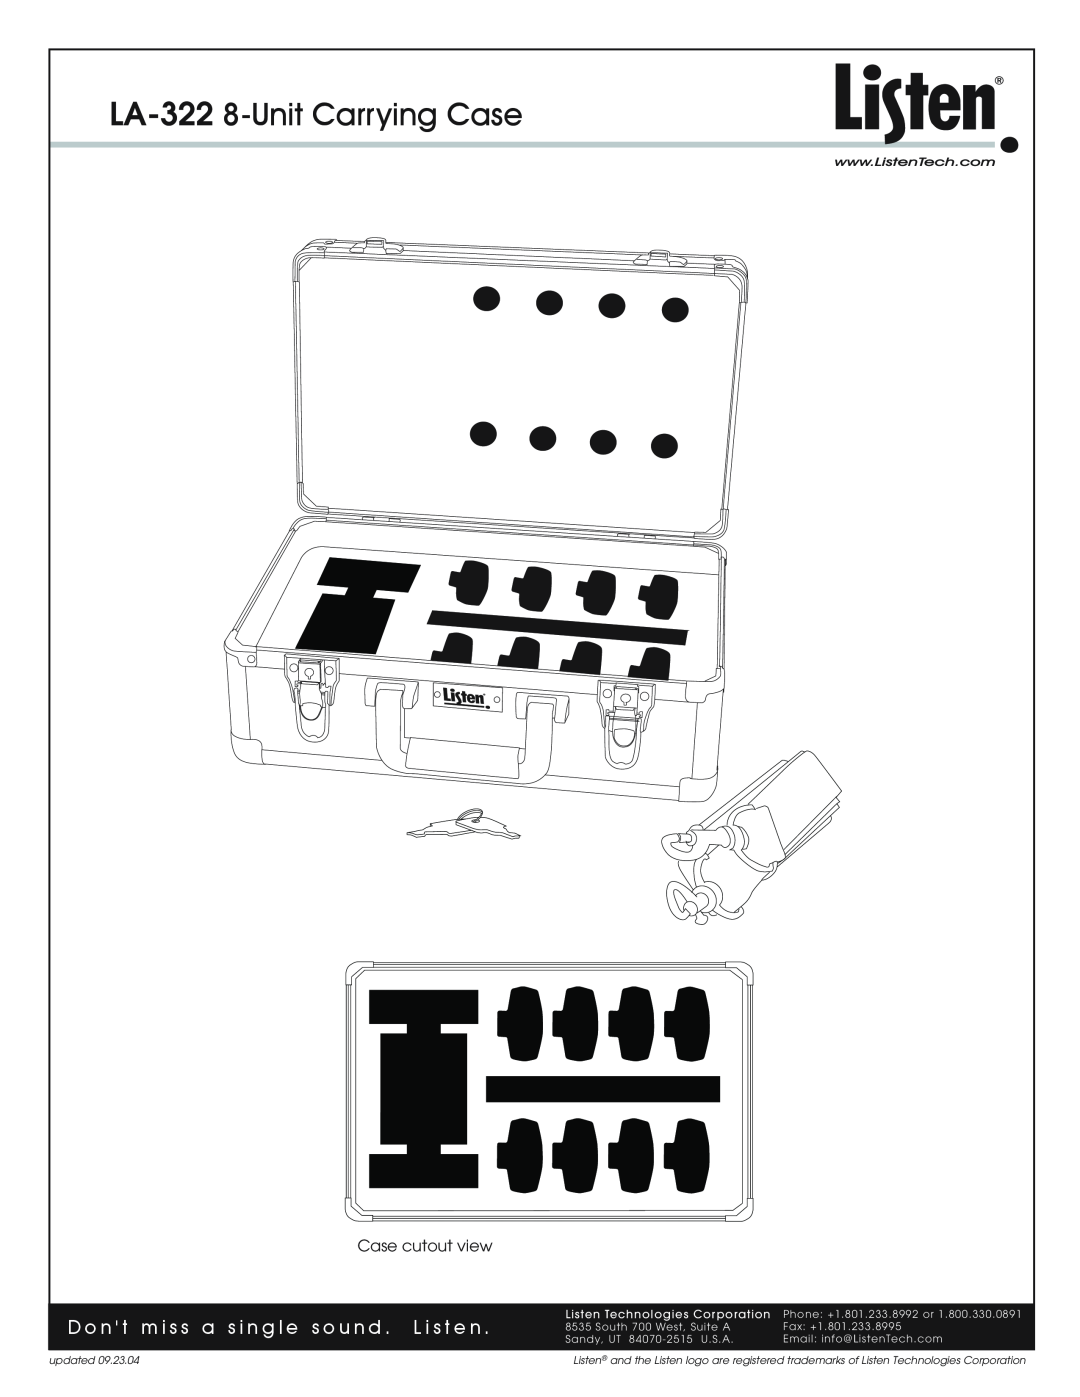 Listen Technologies manual LA-322 8-Unit Carrying Case, D o n t m i s s a s i n g l e s o u n d . L i s t e n, updated 